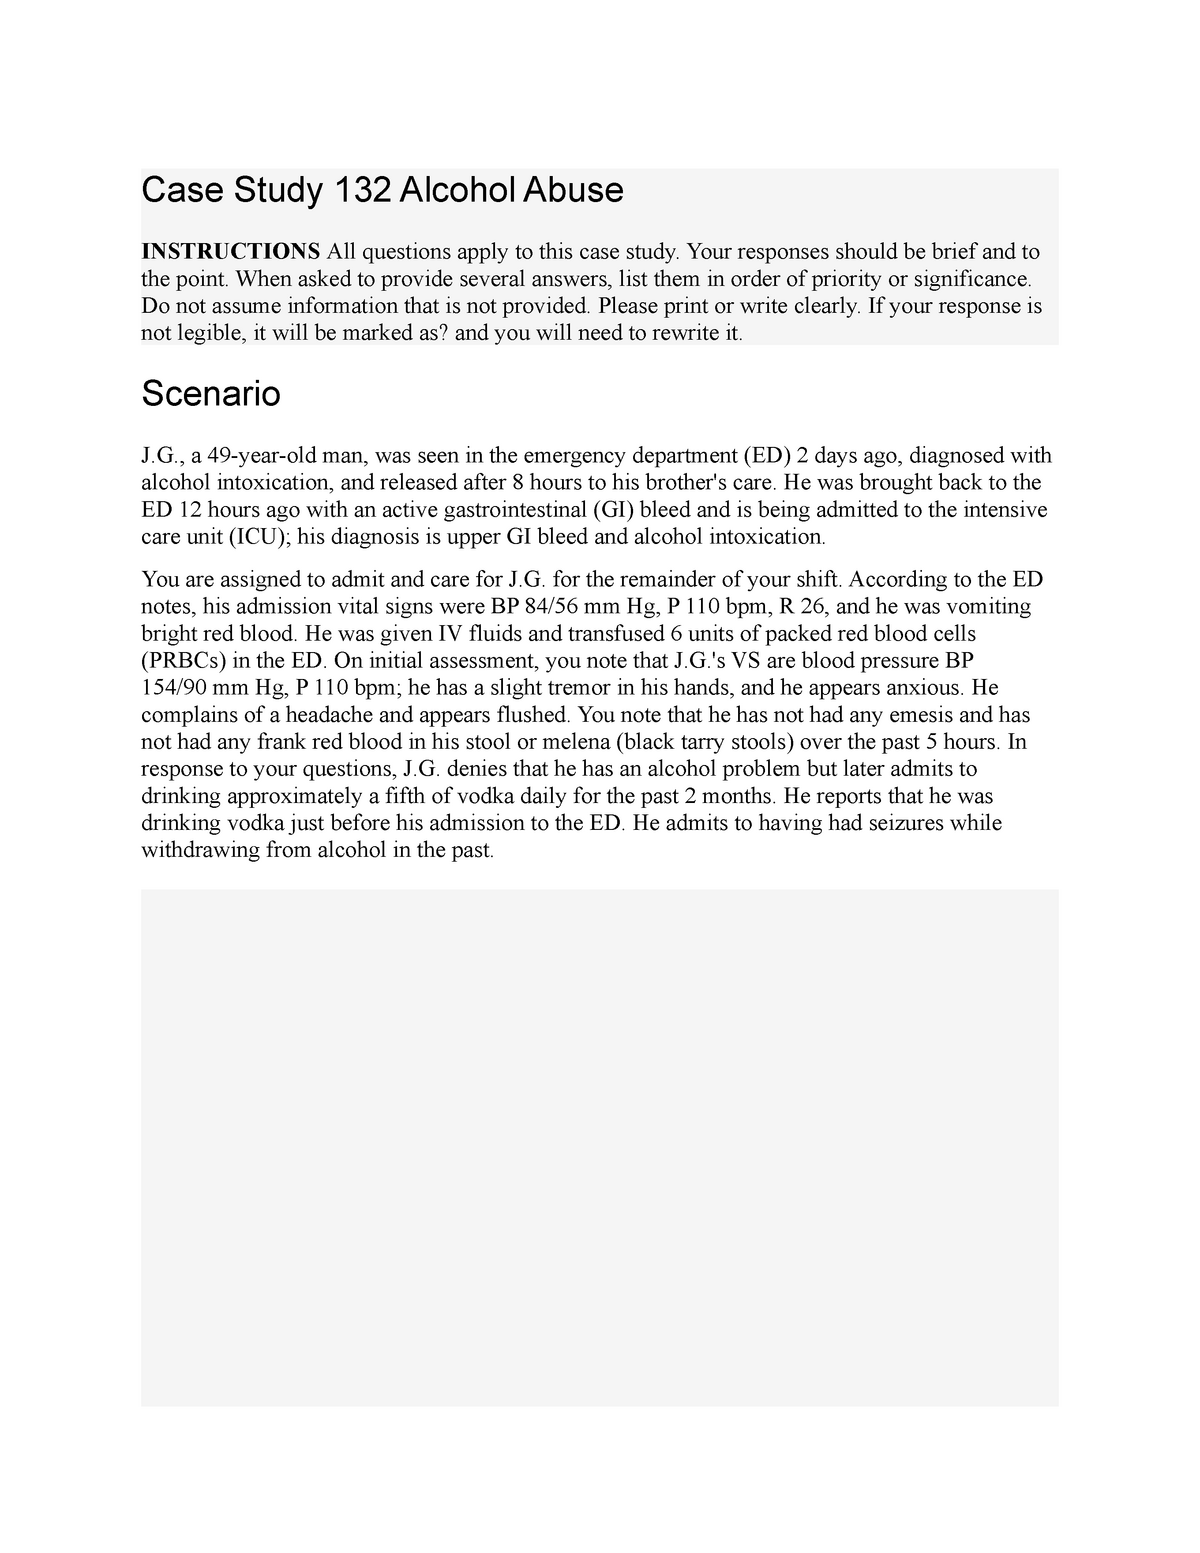 alcohol abuse case study quizlet